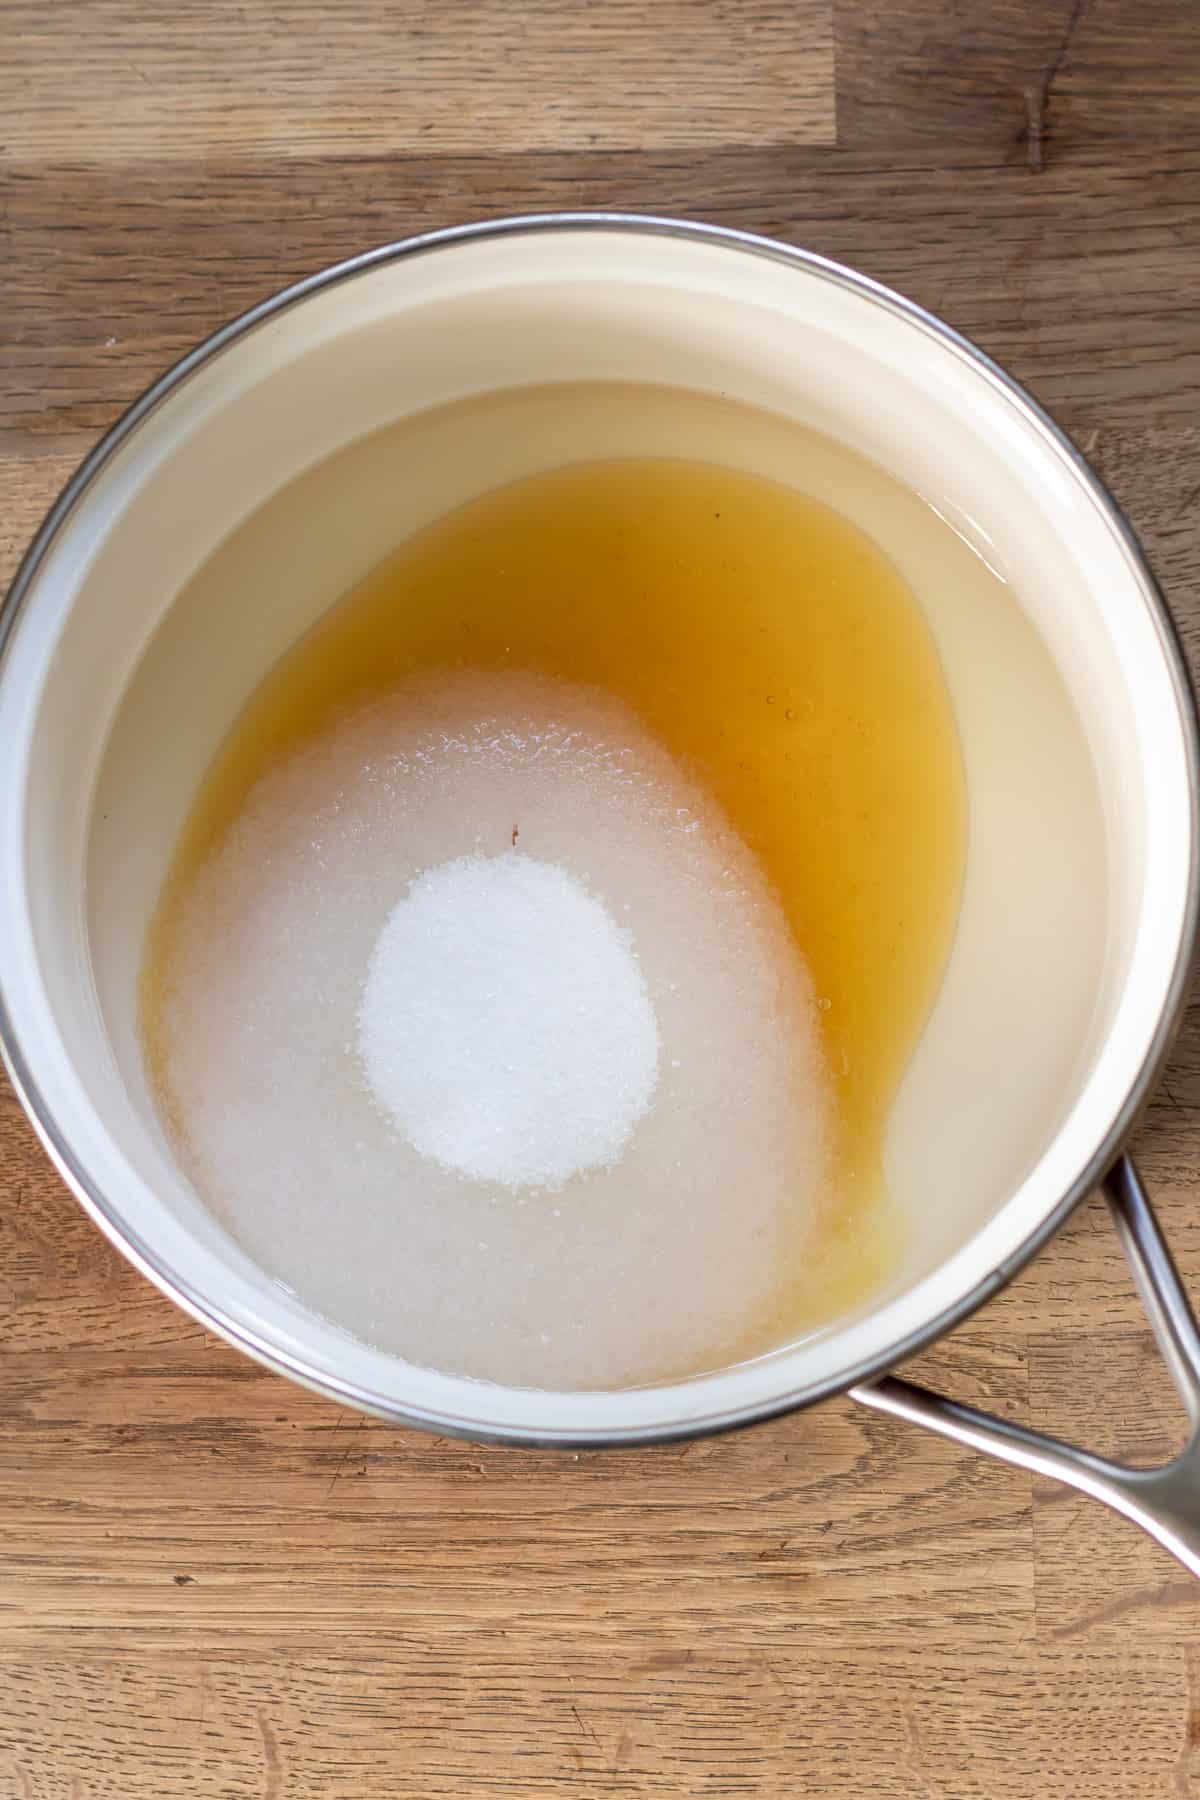 Water, sugar, honey, lemon juice and vanilla in a pot.